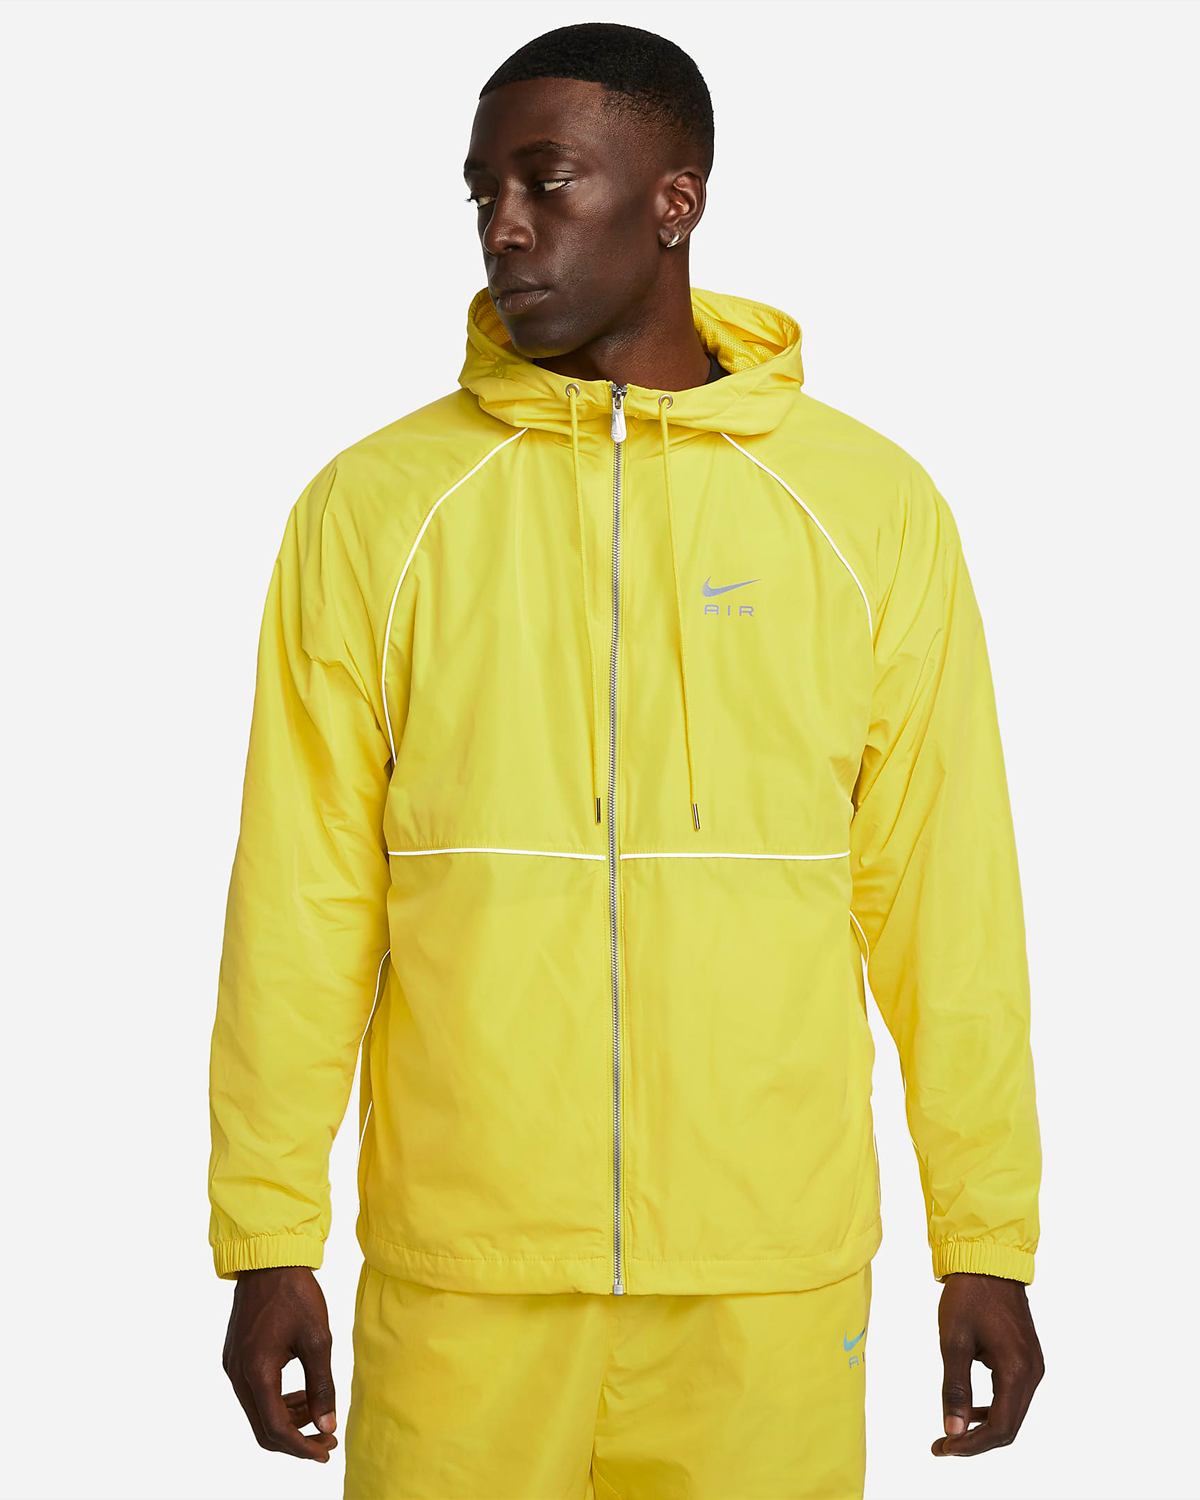 Nike-Air-Hooded-Jacket-Yellow-Strike